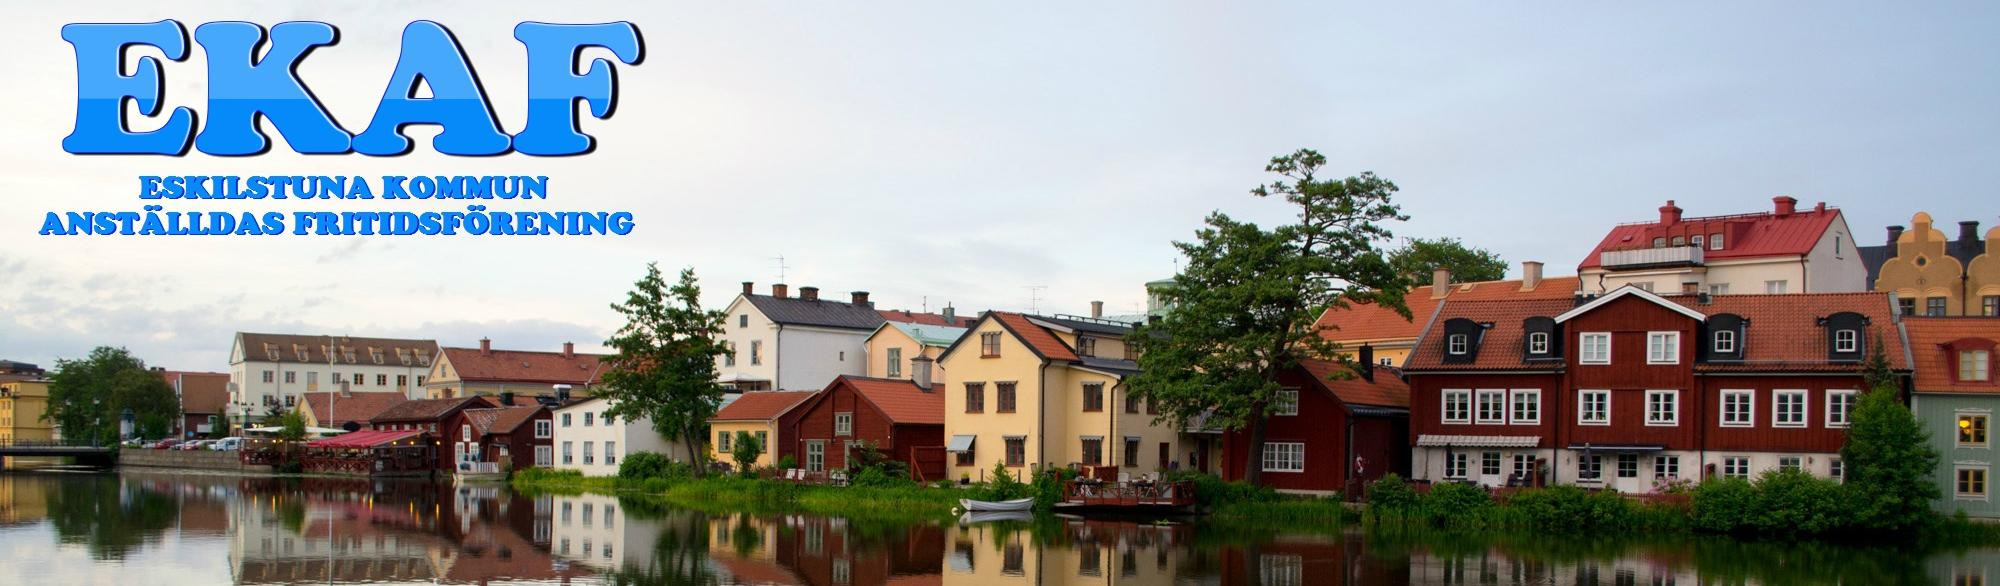 Foto gamla staden Eskilstuna med blå EKAF logga